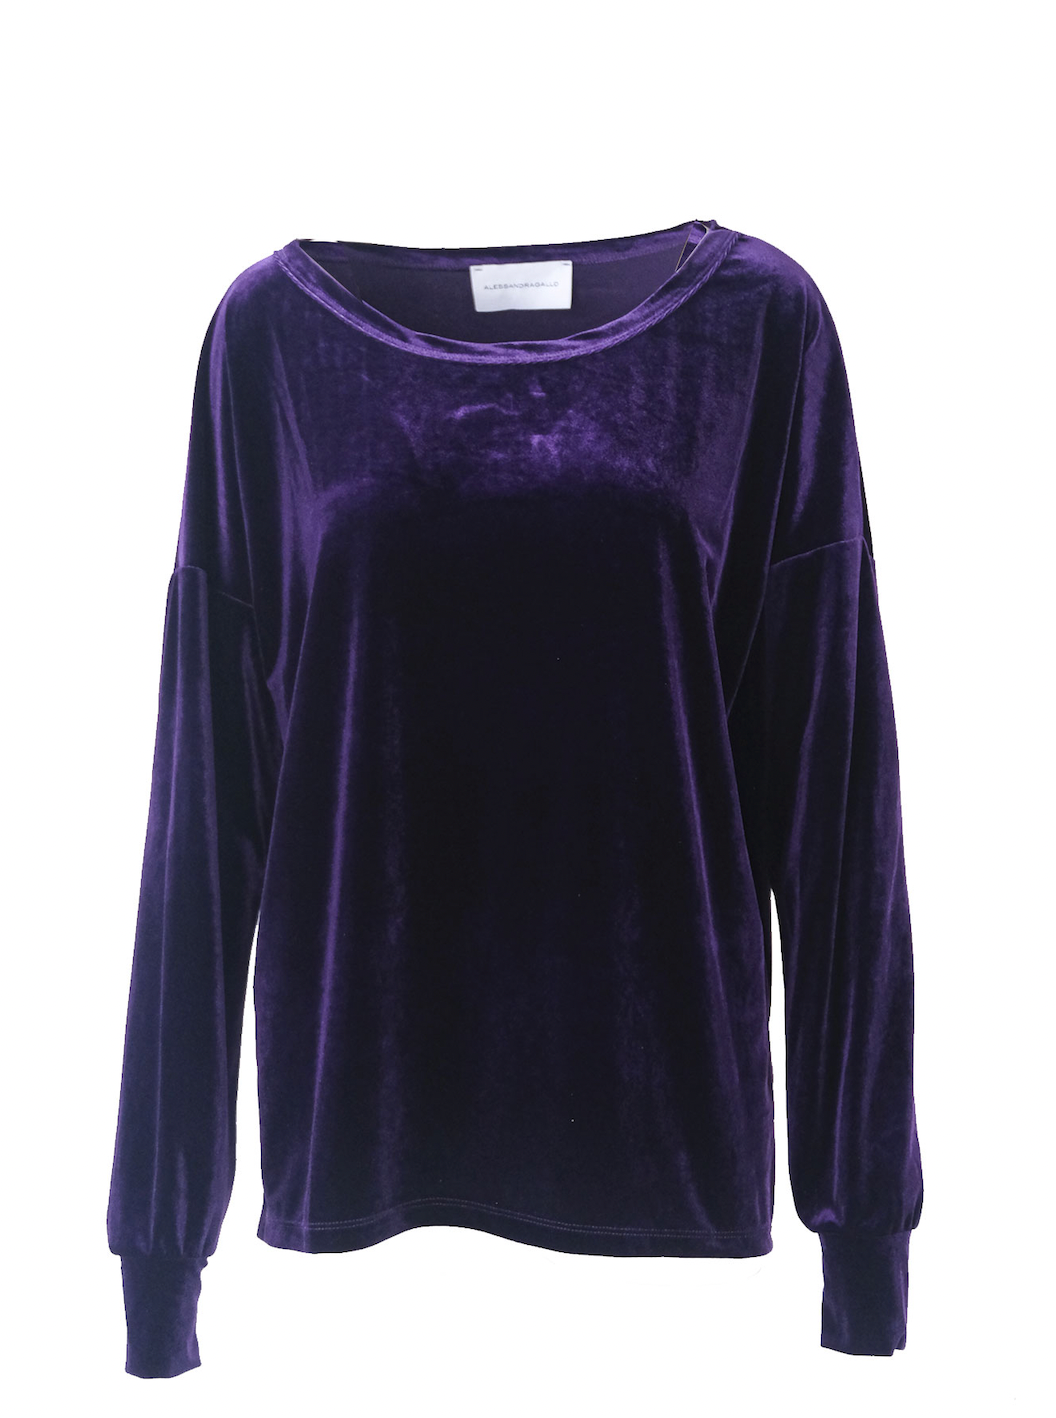 LAVINIA - sailor neckline sweatshirt in purple chenille